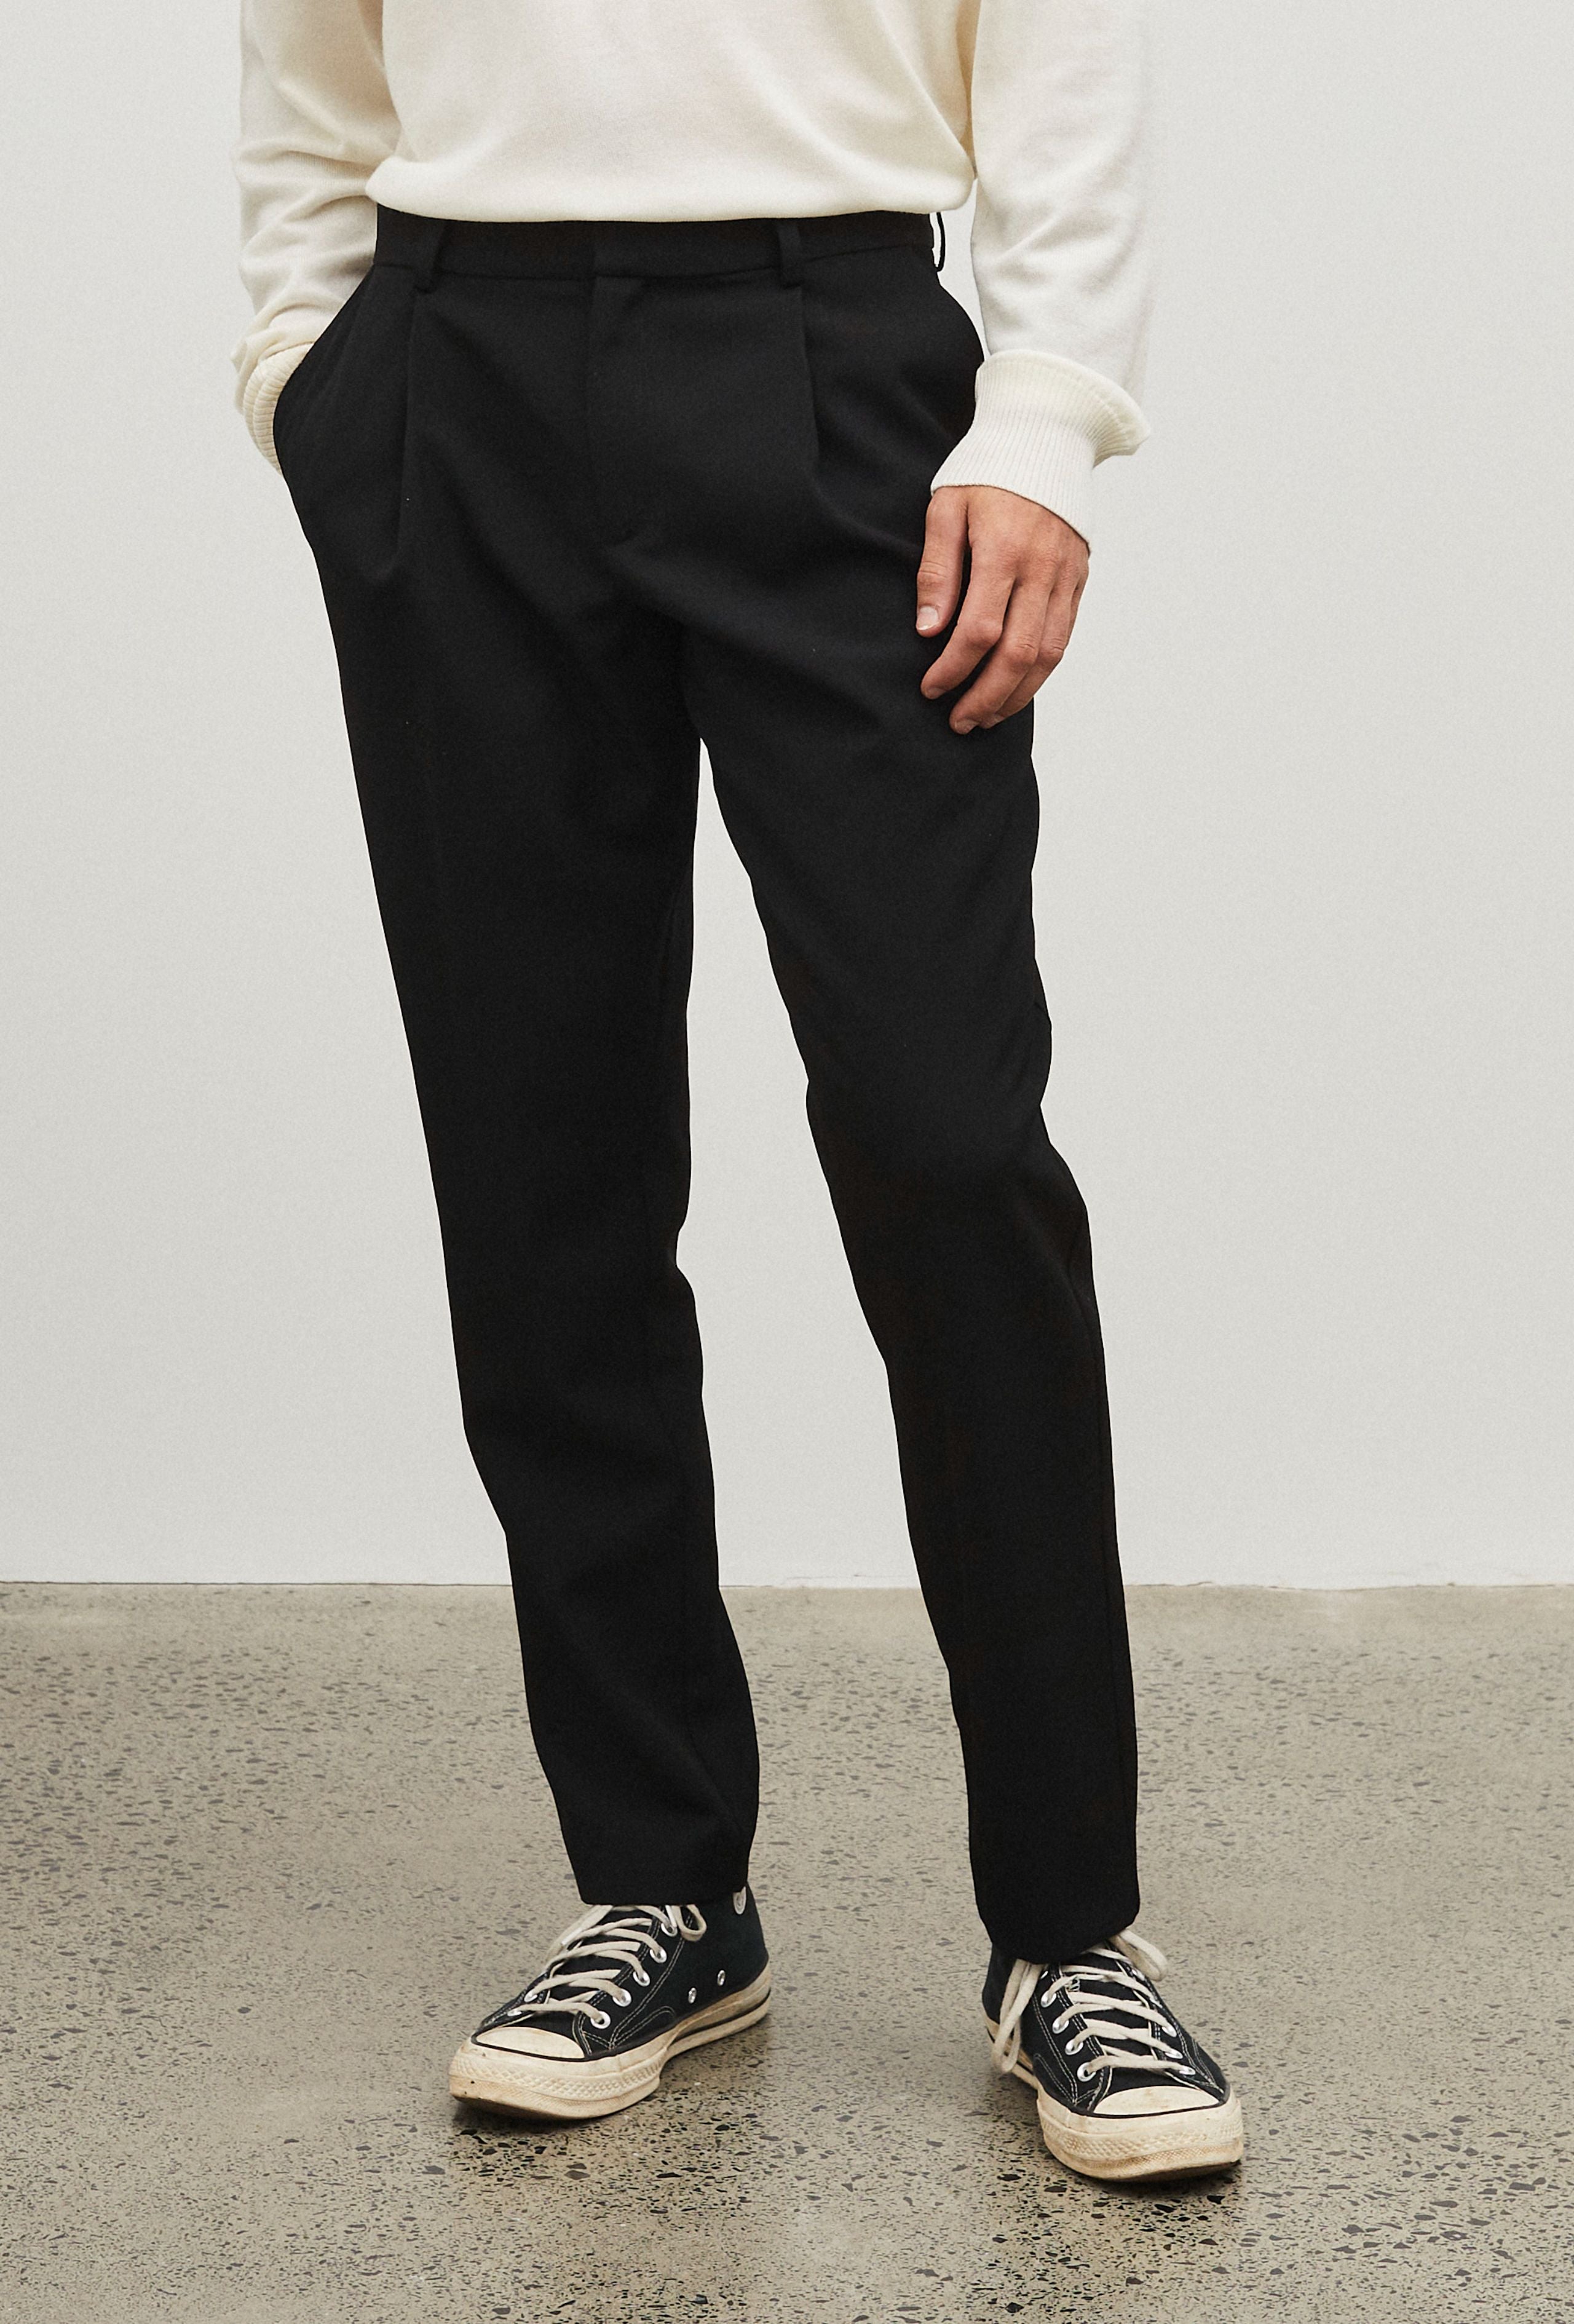 Joe Black tailored fit solidus trouser in black pure wool FCK410 – Mens  Suit Warehouse - Melbourne